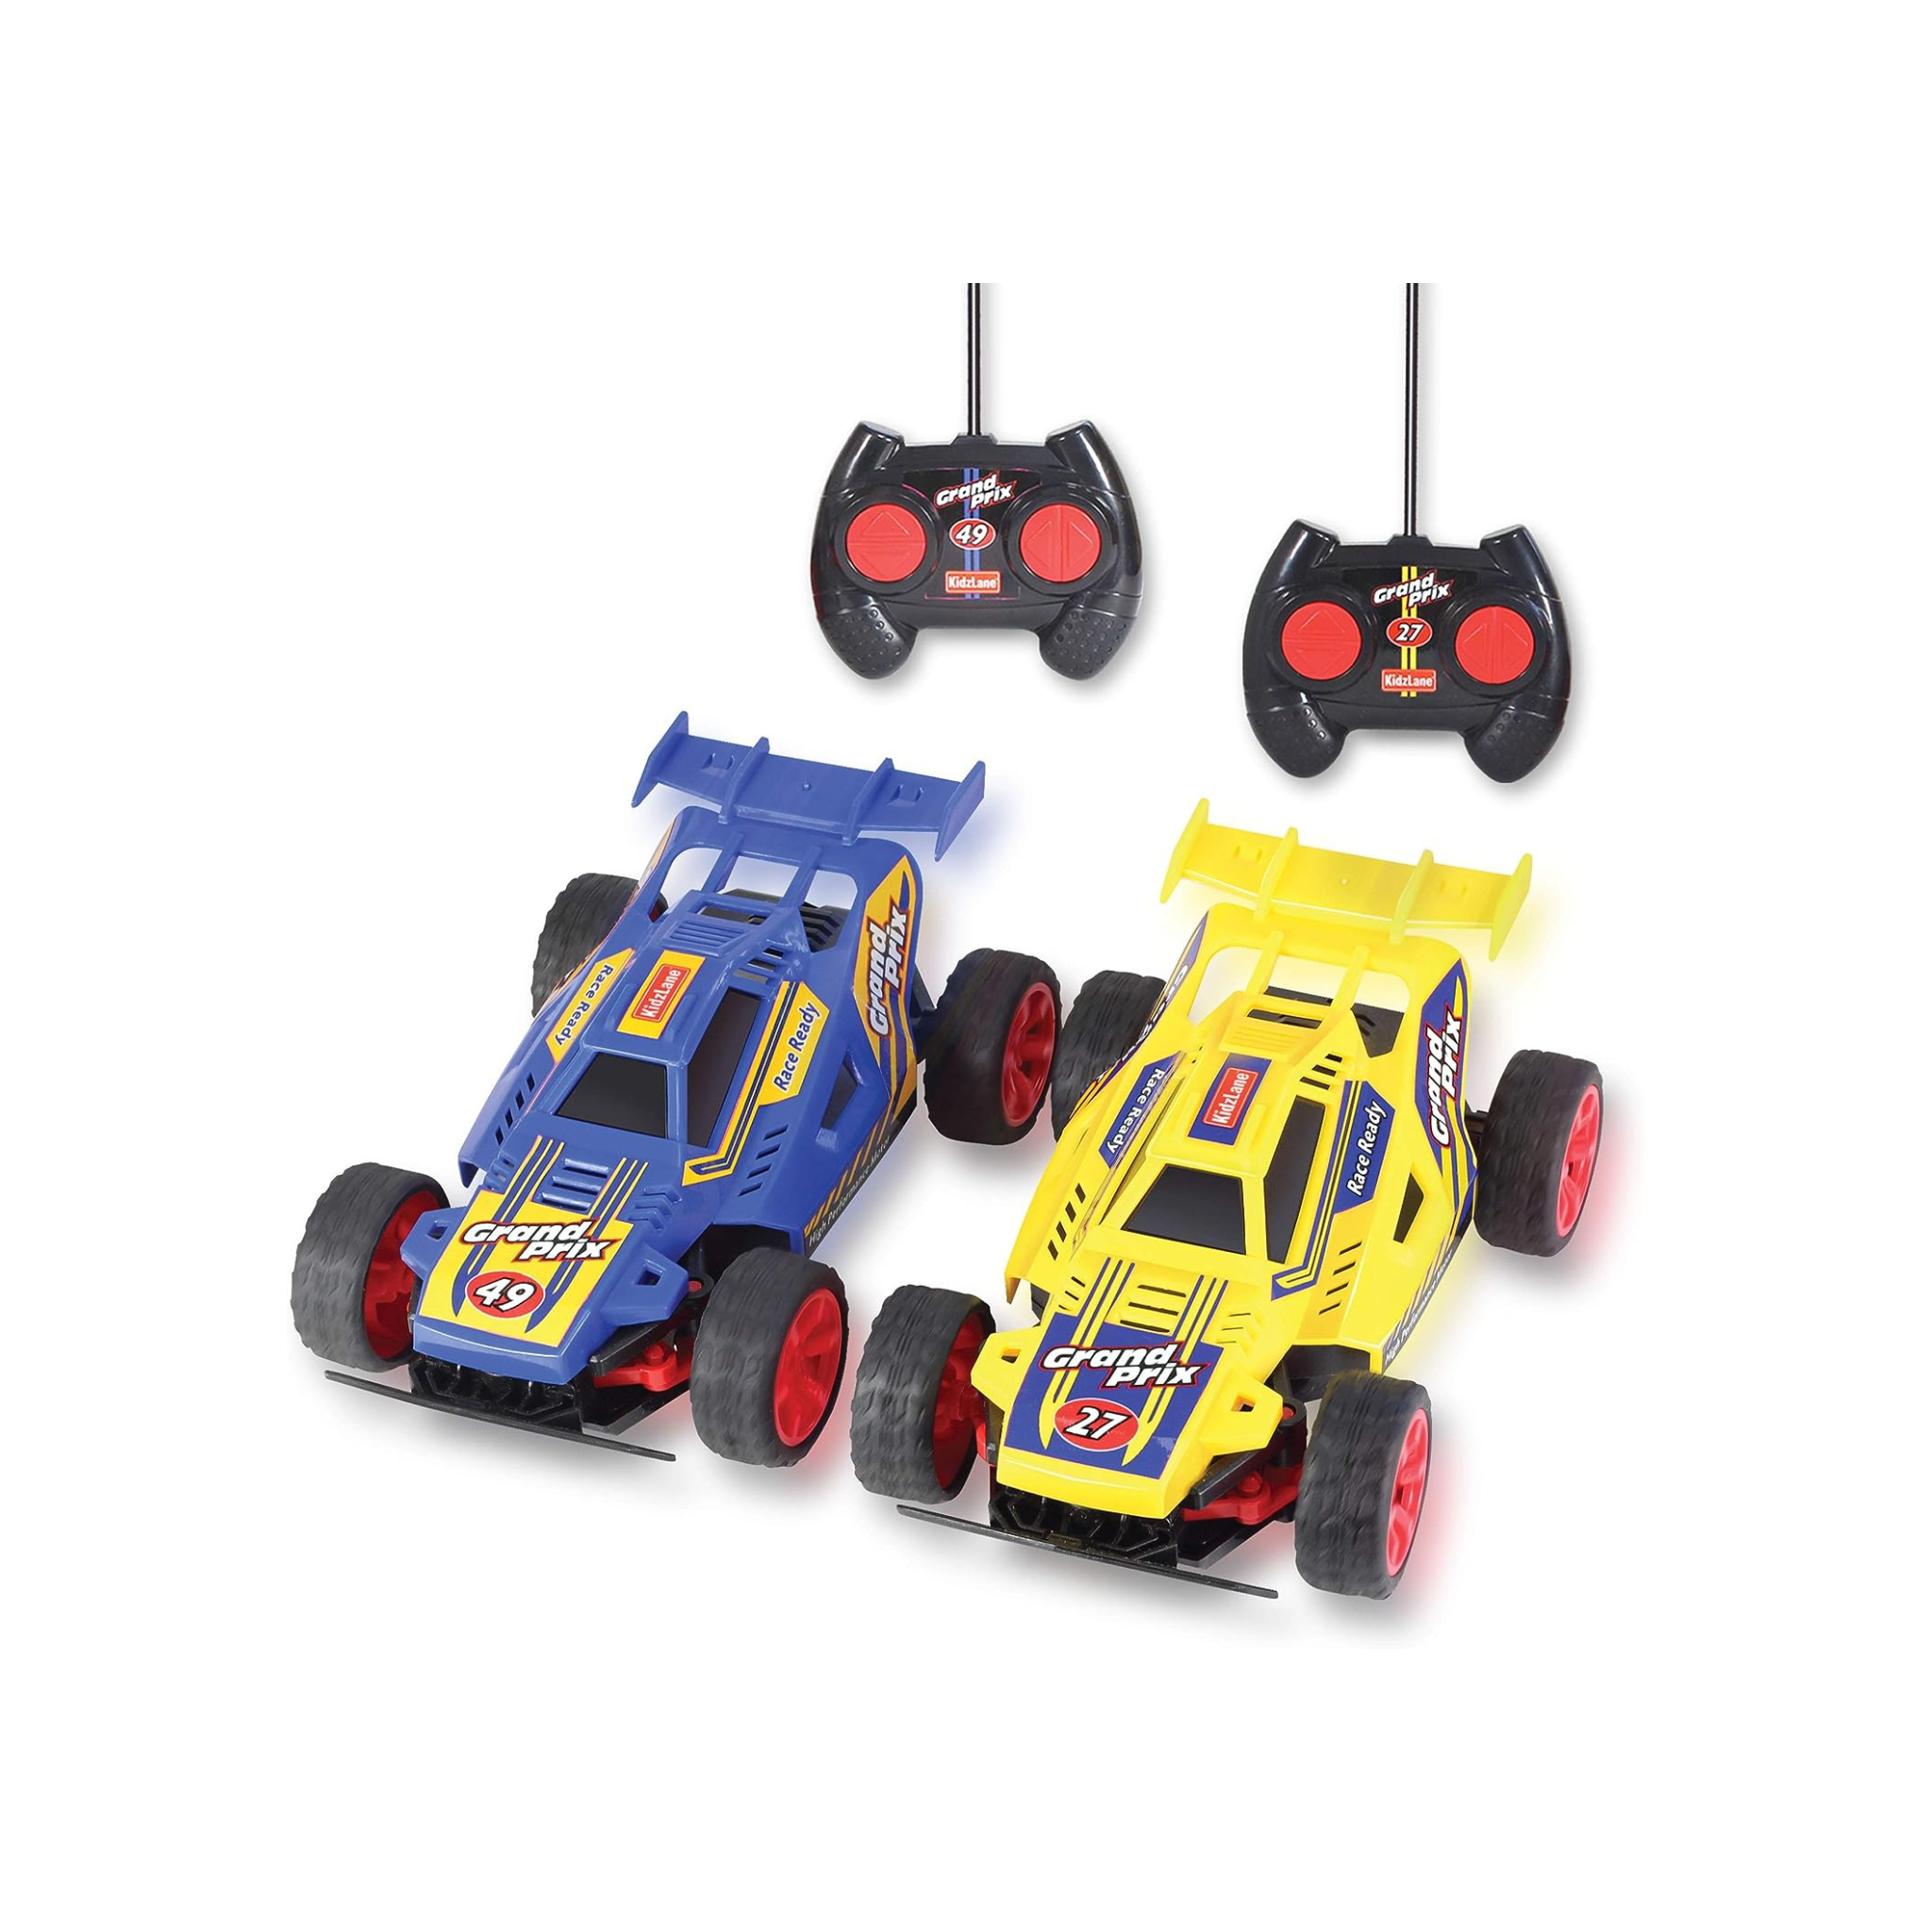 2 Kidzlane Kids Remote Control Cars